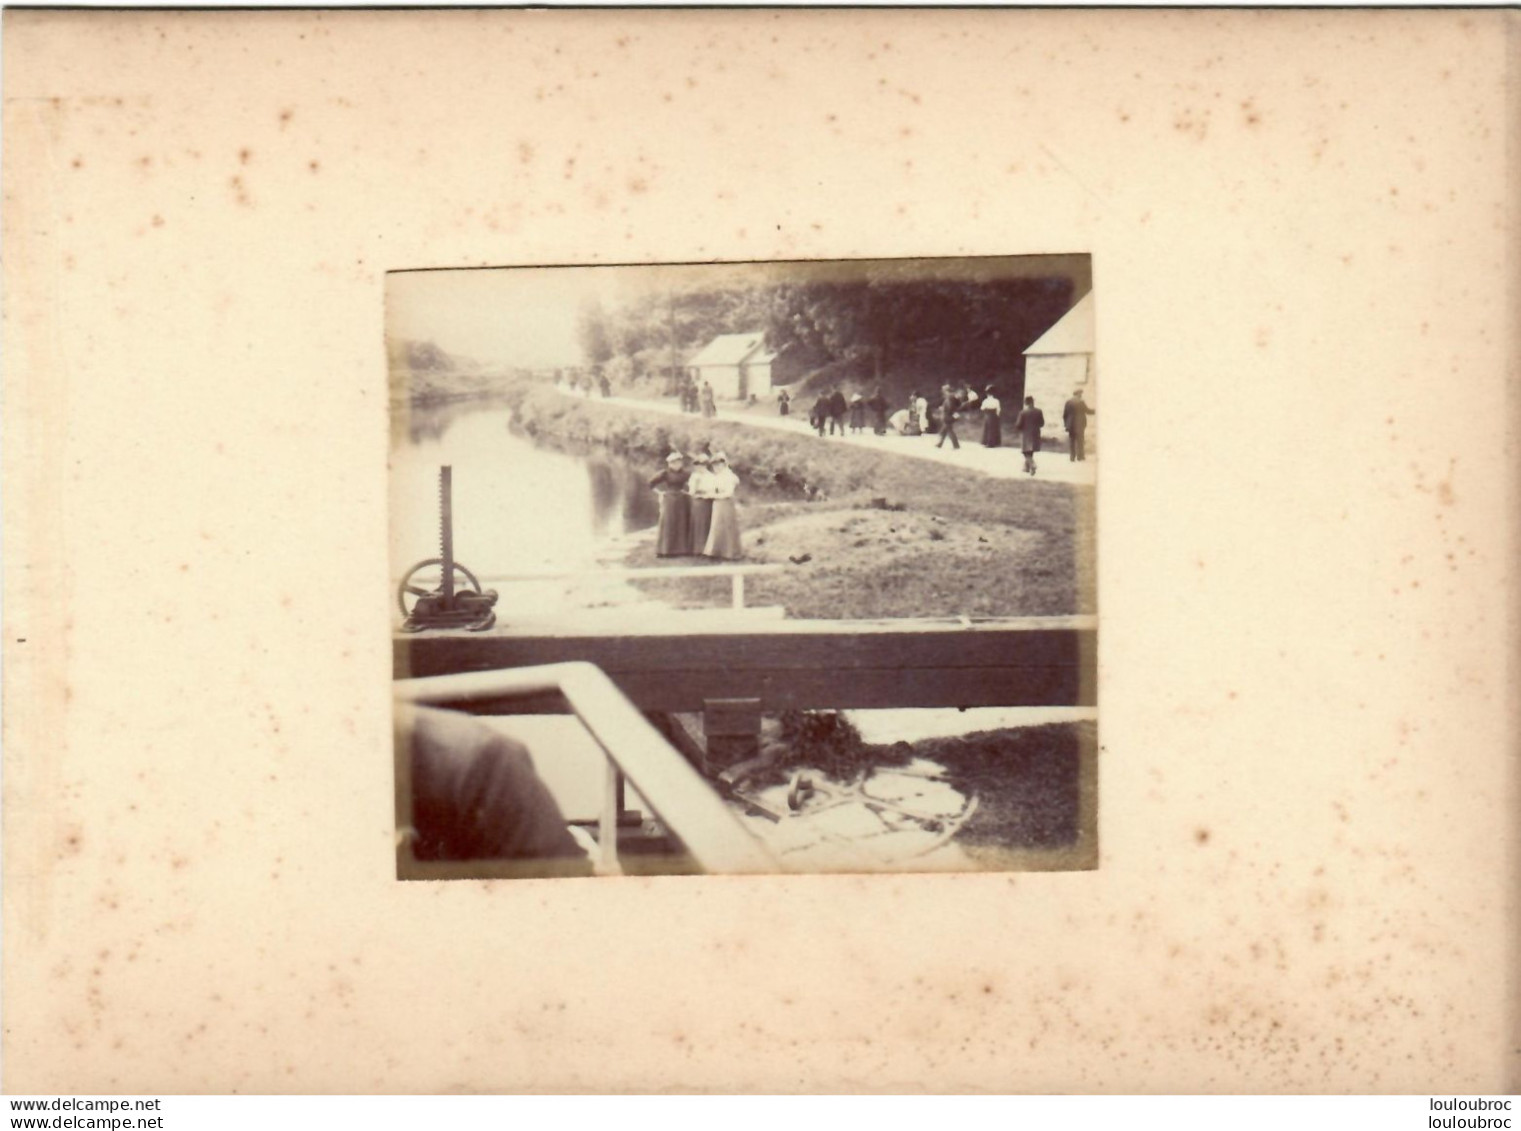 ECOSSE CANAL DE CRINAN ECLUSE N°6 PHOTO ORIGINALE DE 8.50X7 CM COLLEE SUR CARTON 18X13CM - Old (before 1900)